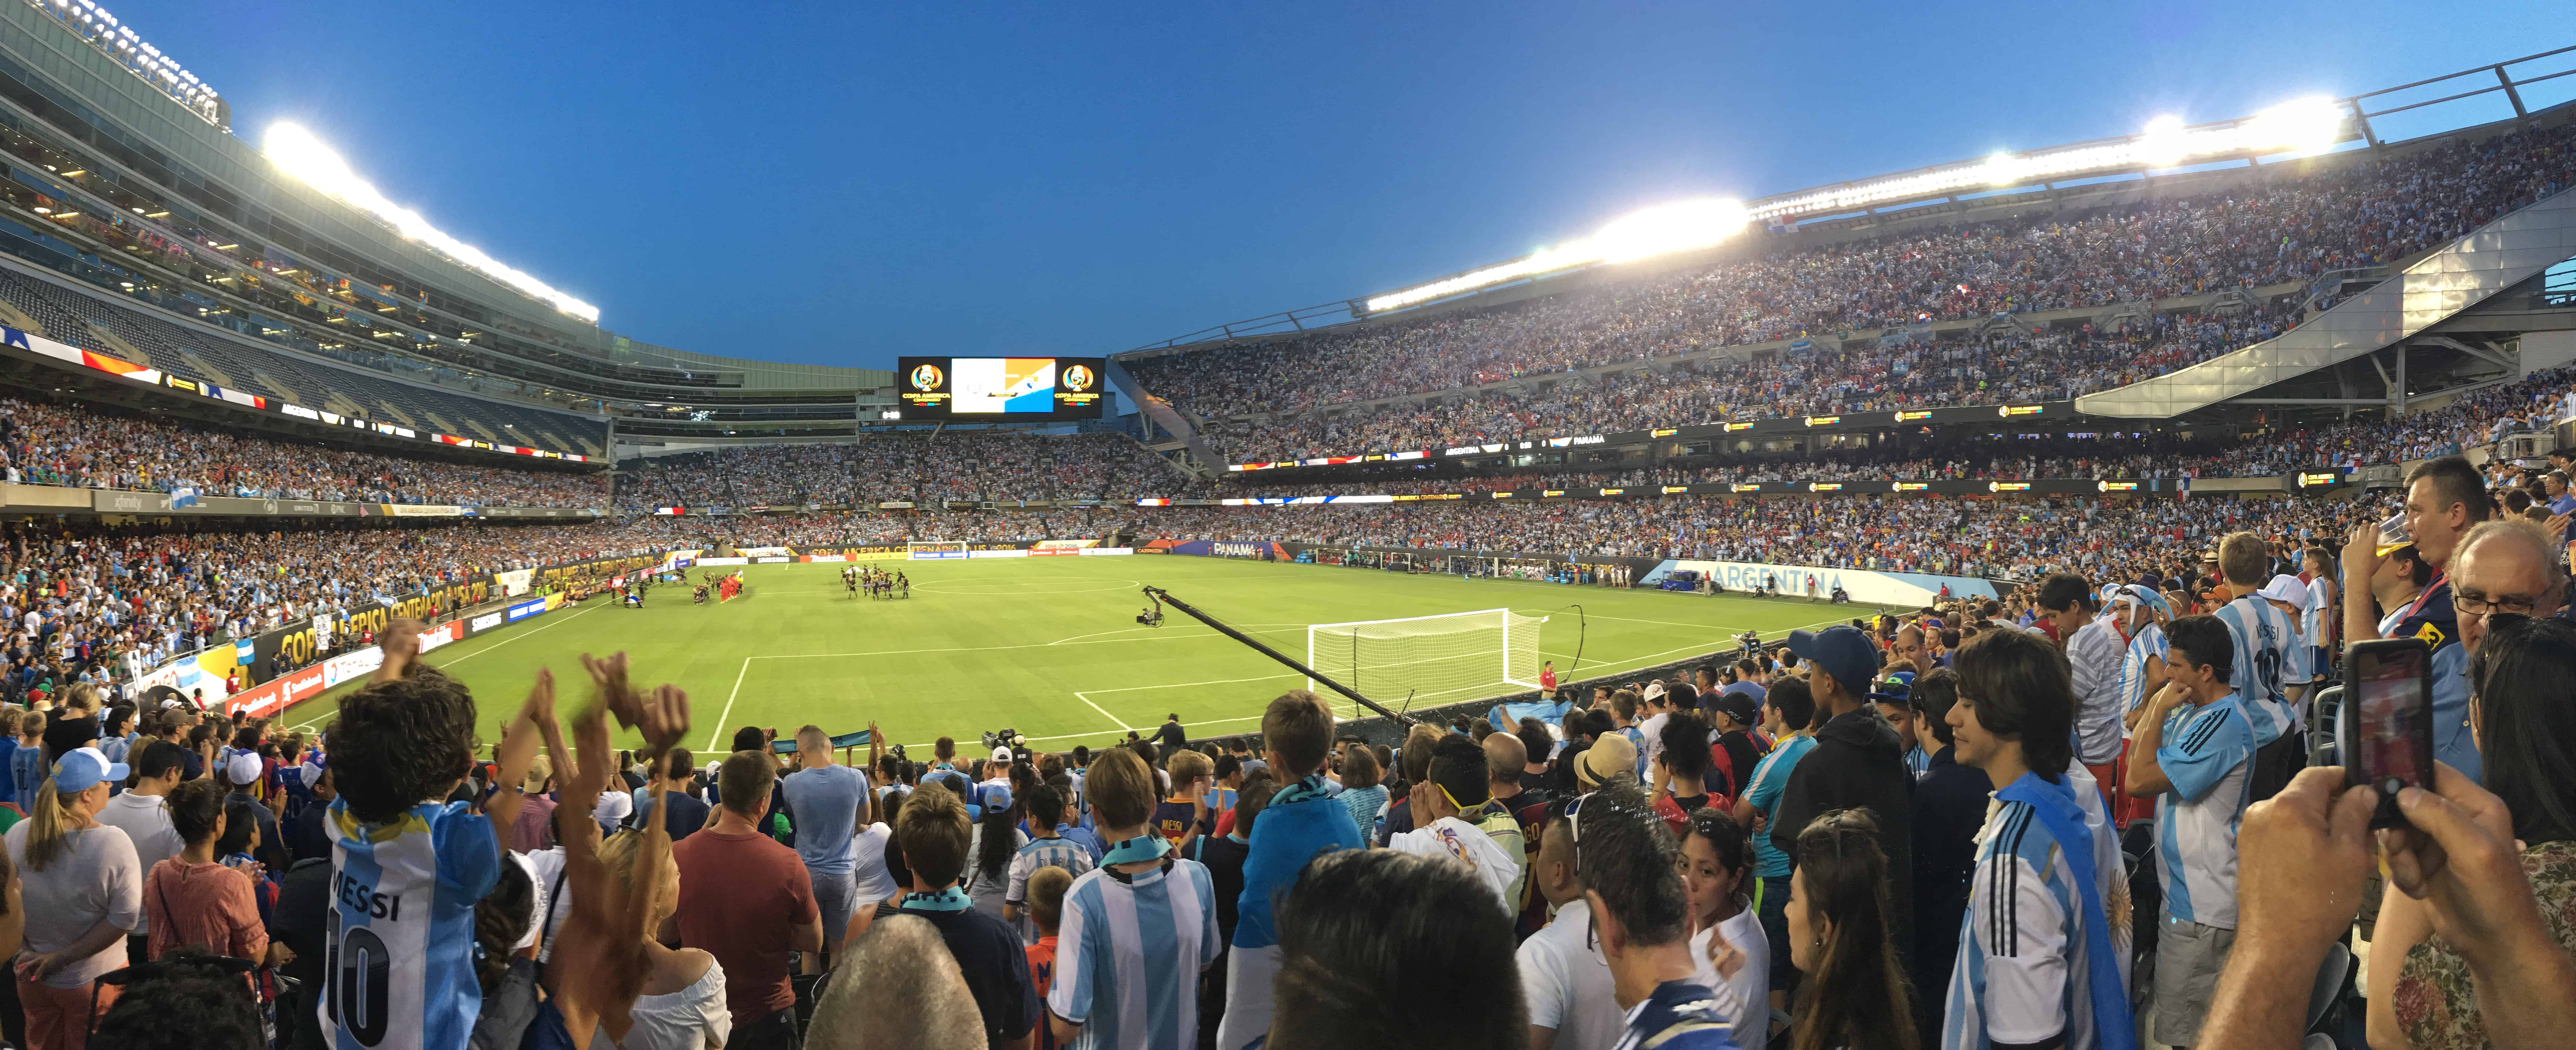 Argentina vs Panamá at Copa América Centenario USA 2016 at Soldier Field in Chicago, Illinois